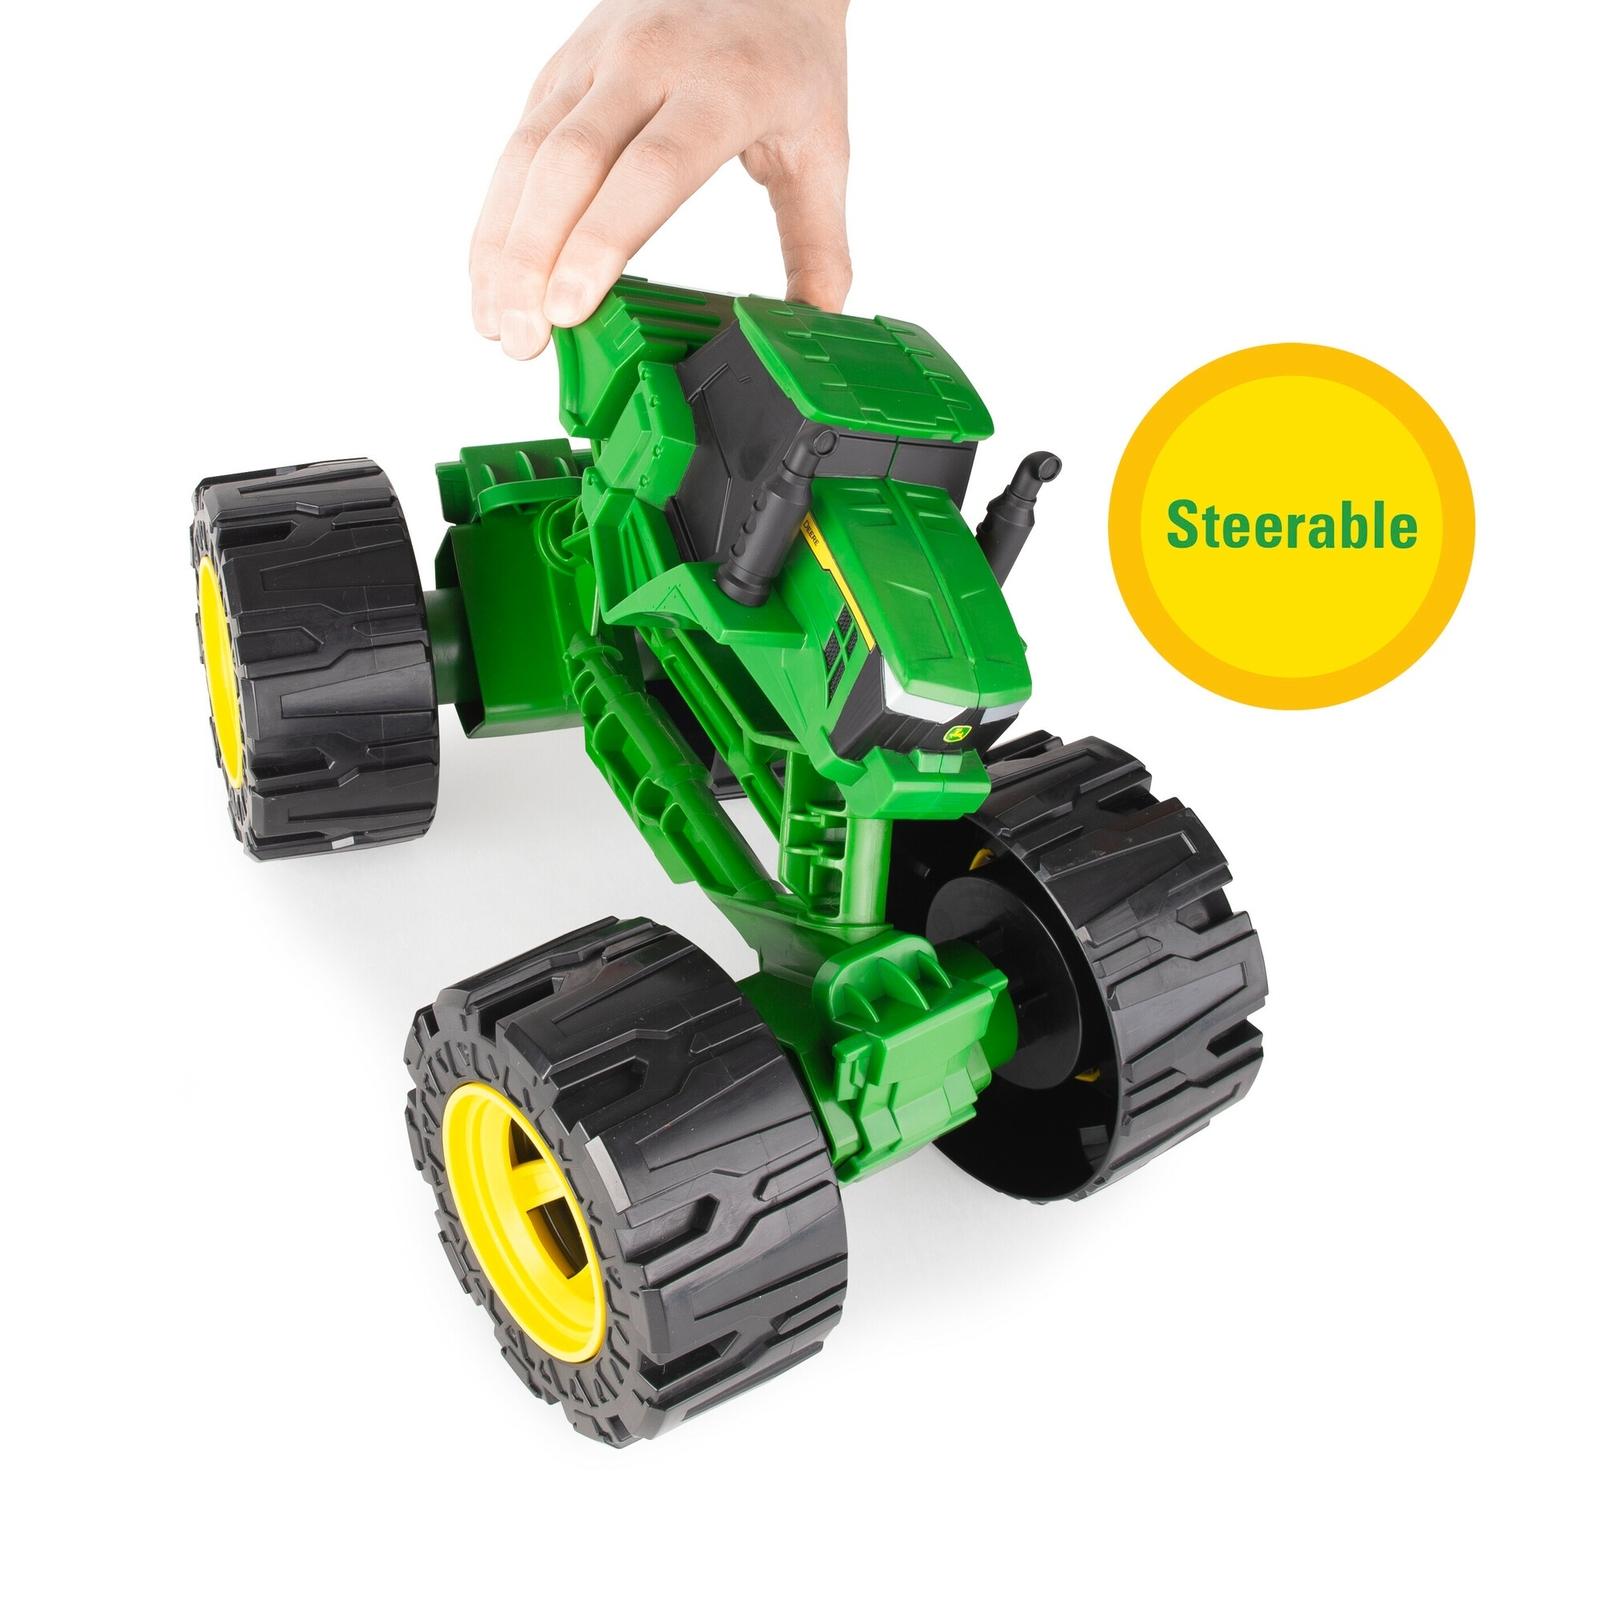 John Deere Monster Treads 12 Inch Tractor Toy showing it is steerable